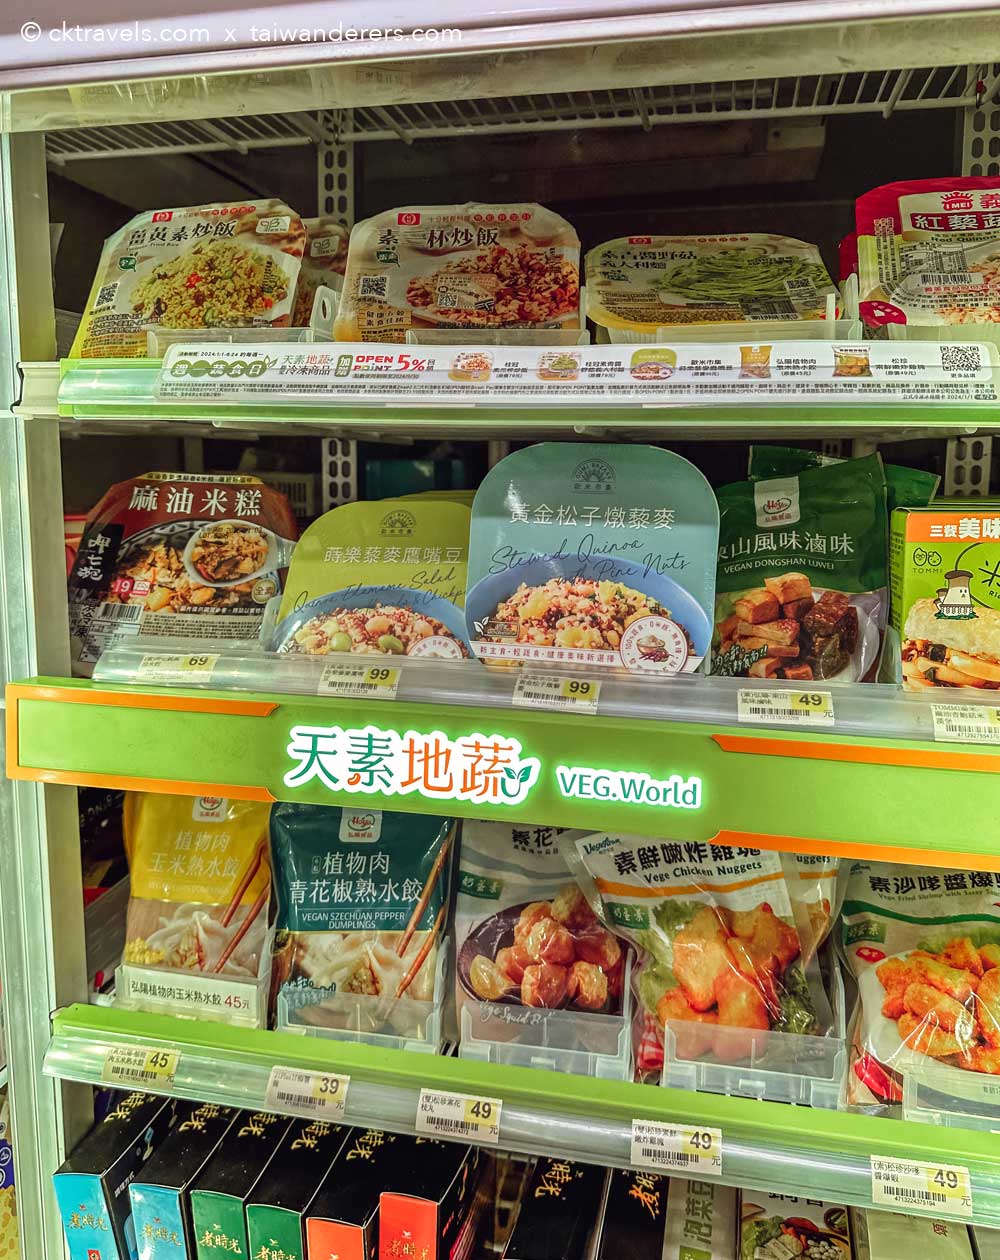 Vegetarian Section / VEG World  7-Eleven Taiwan 